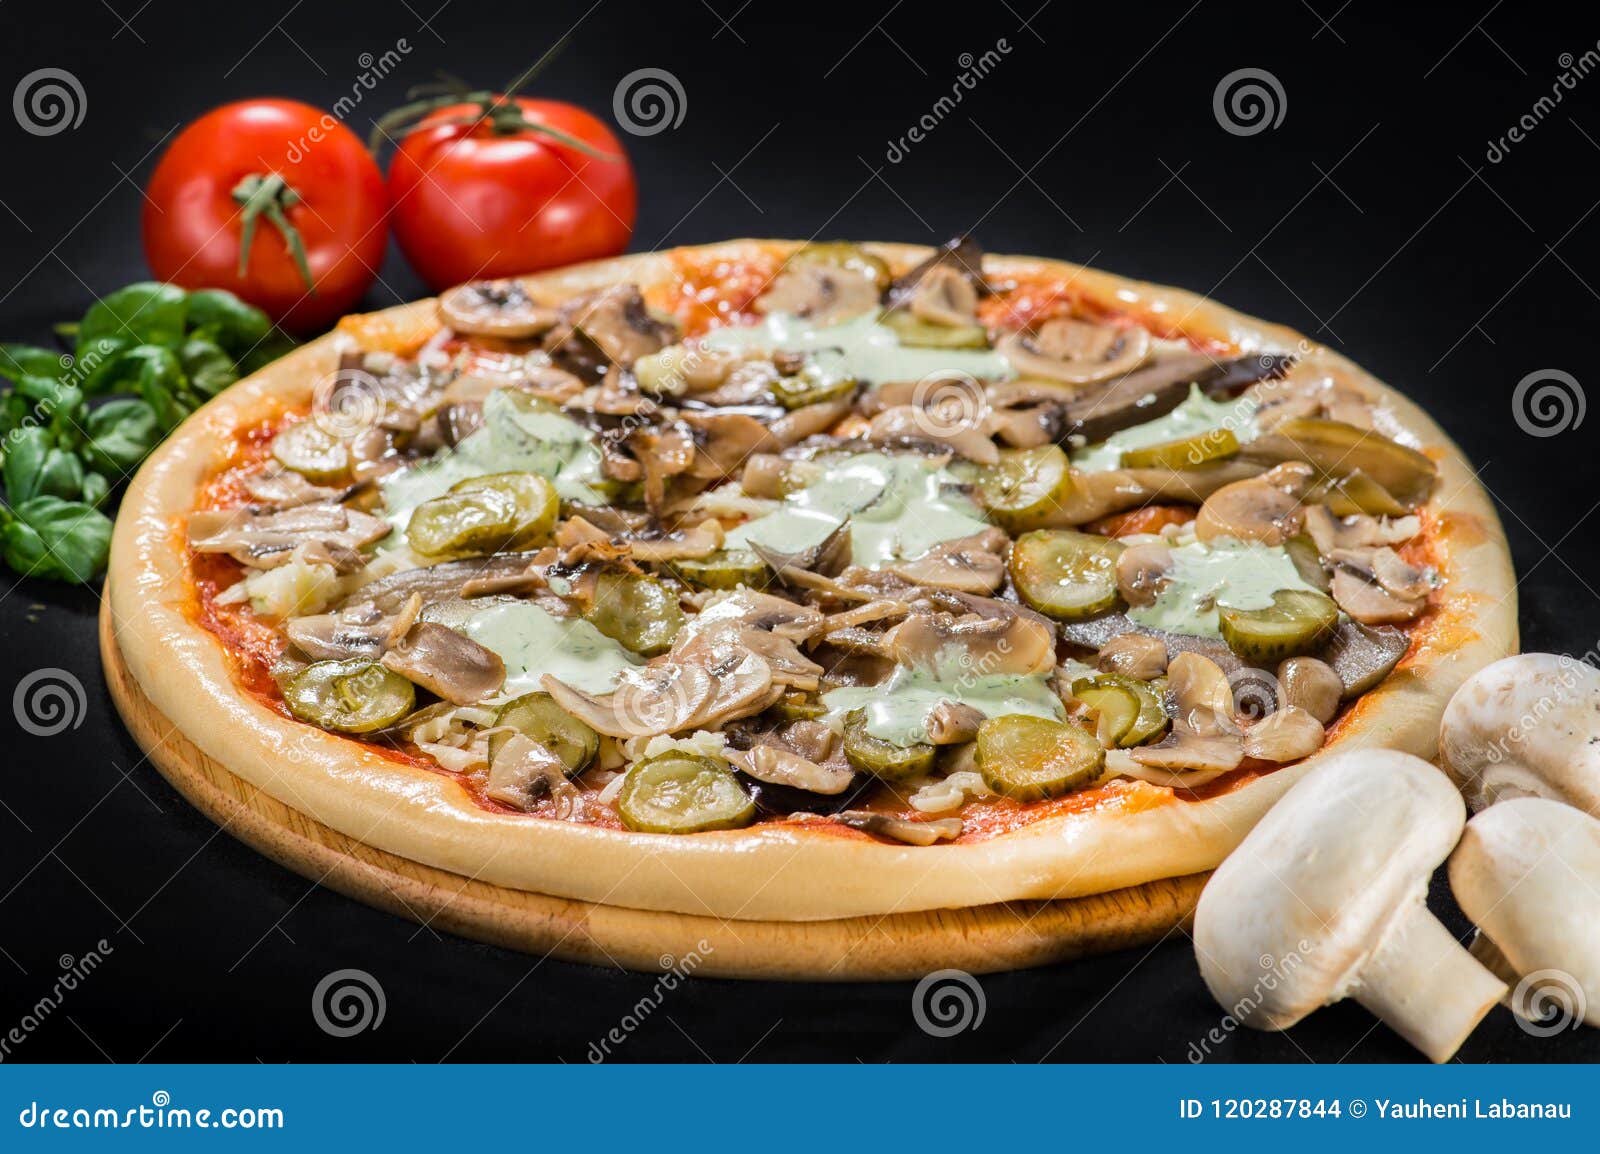 грибная пицца с помидорами фото 83